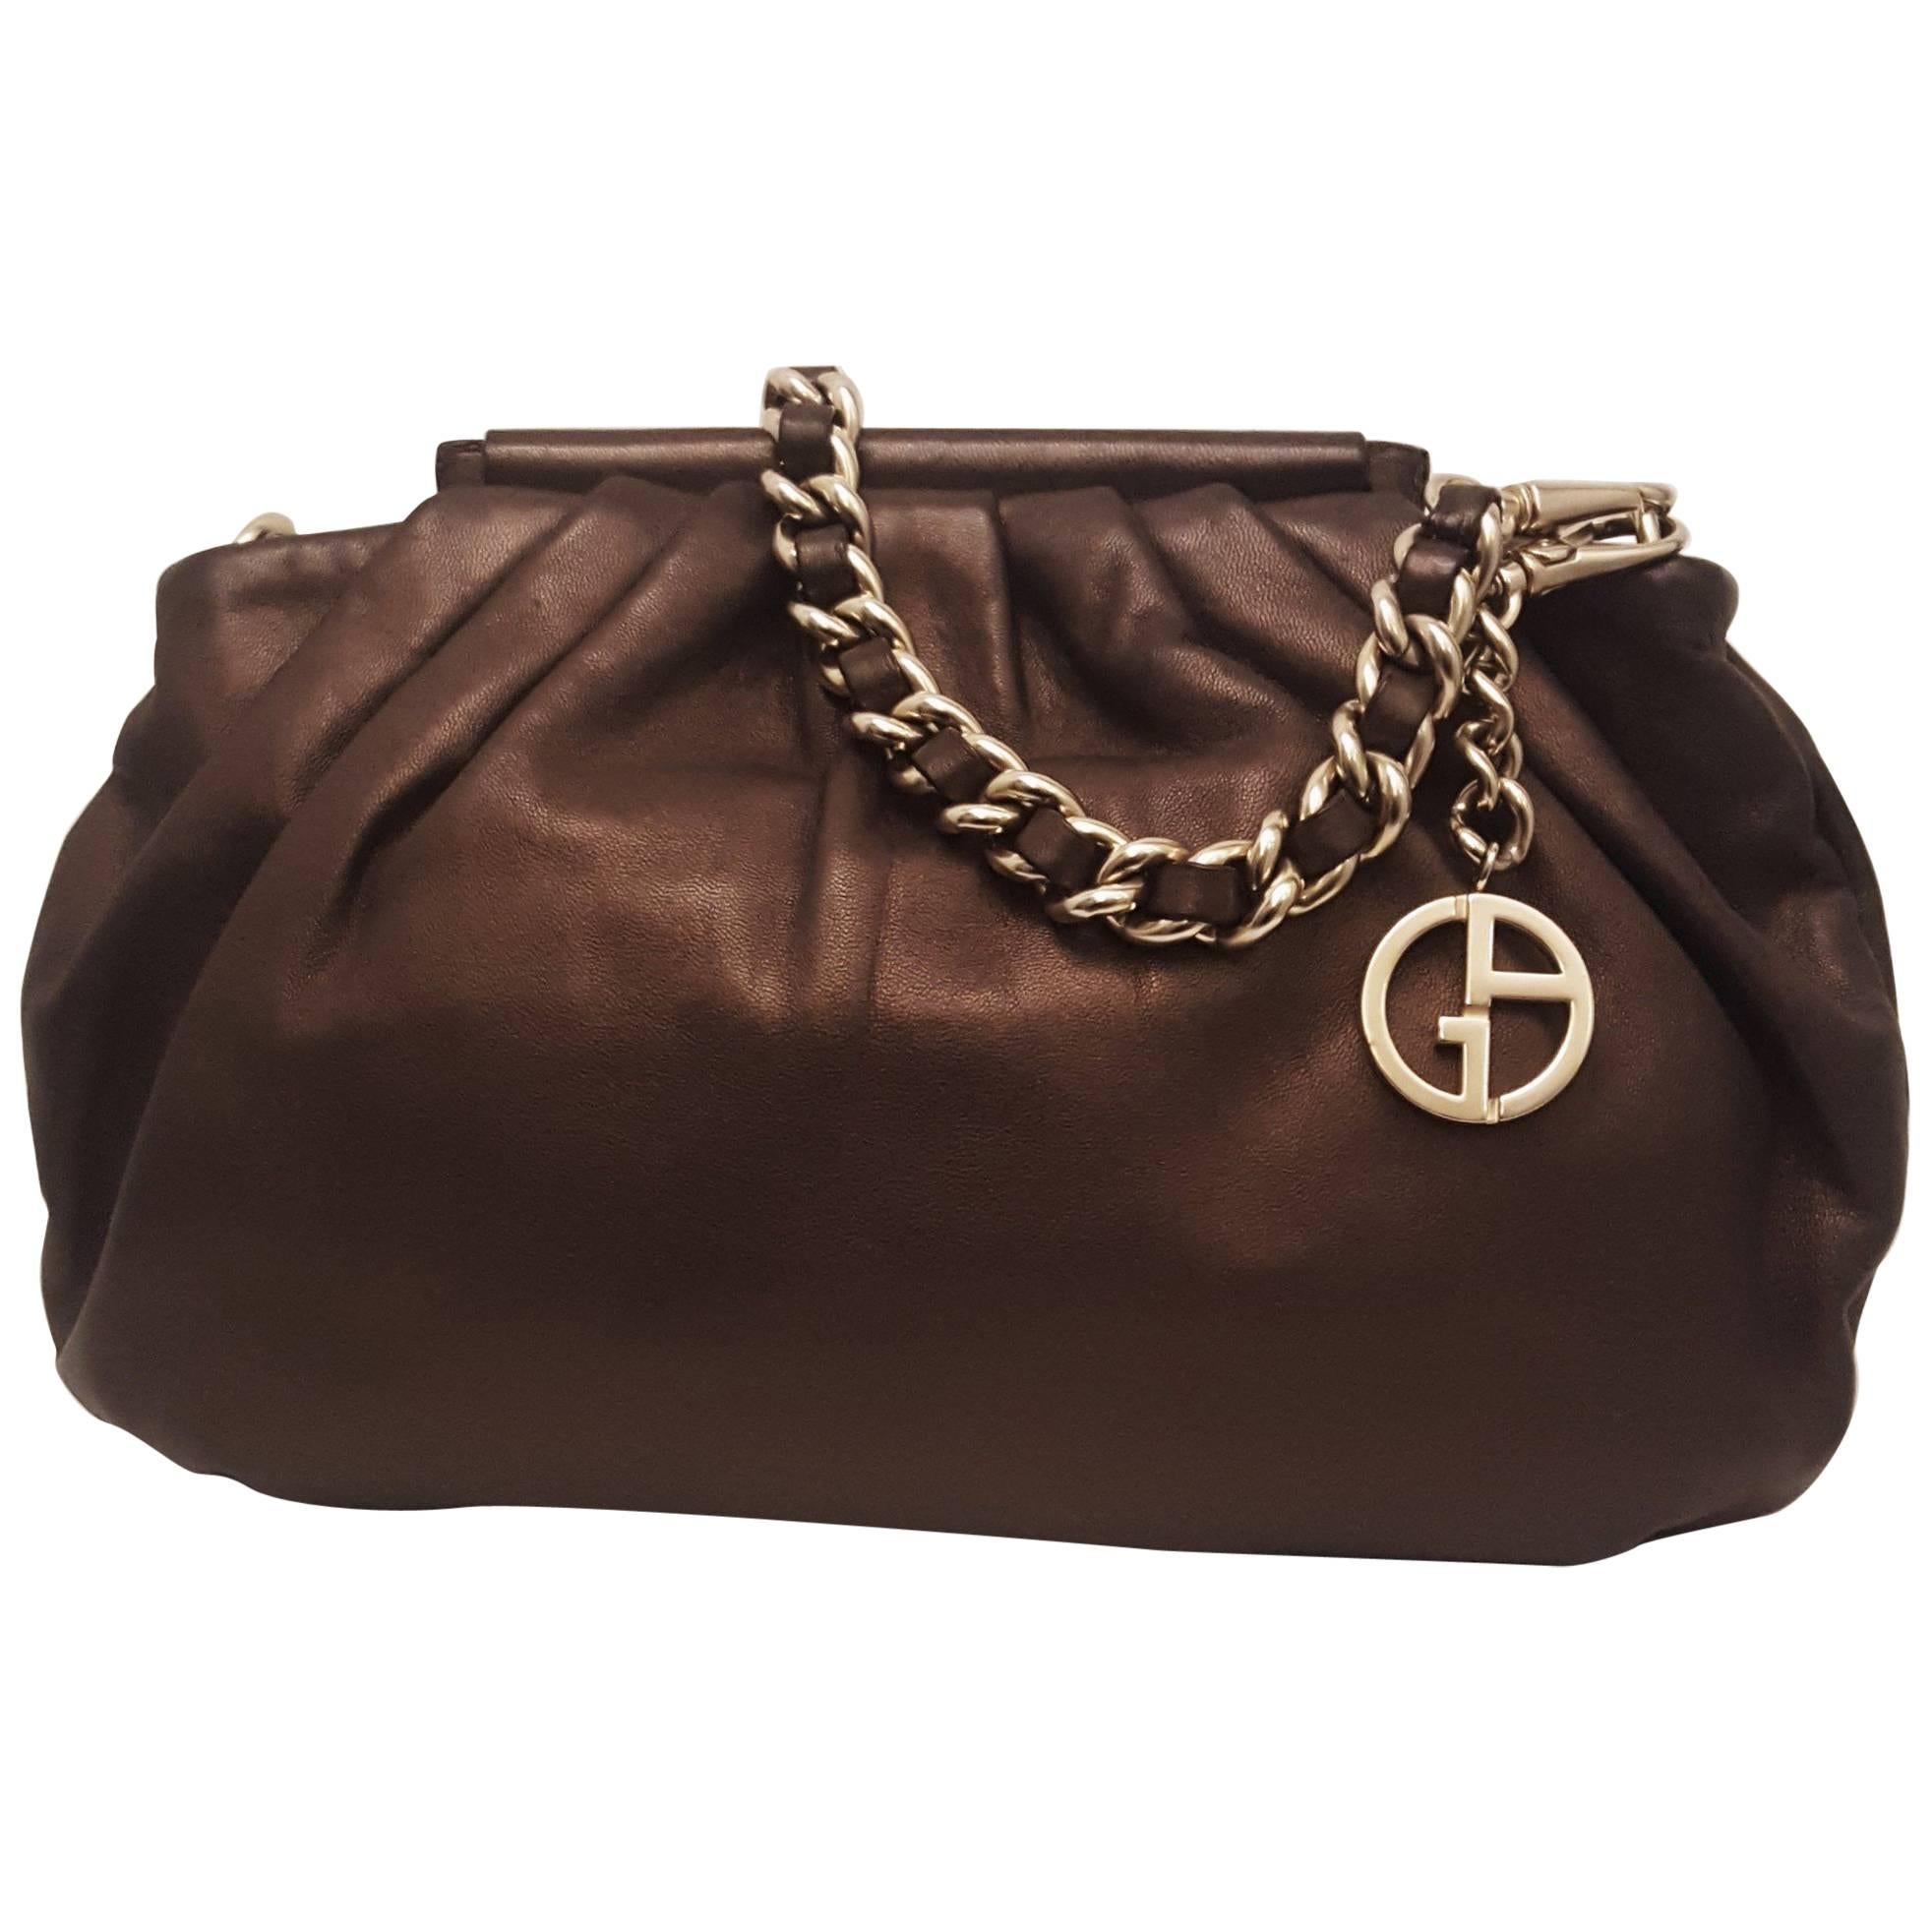 Giorgio Armani Bronze Tone Leather Handbag with Foldable Top Handles 